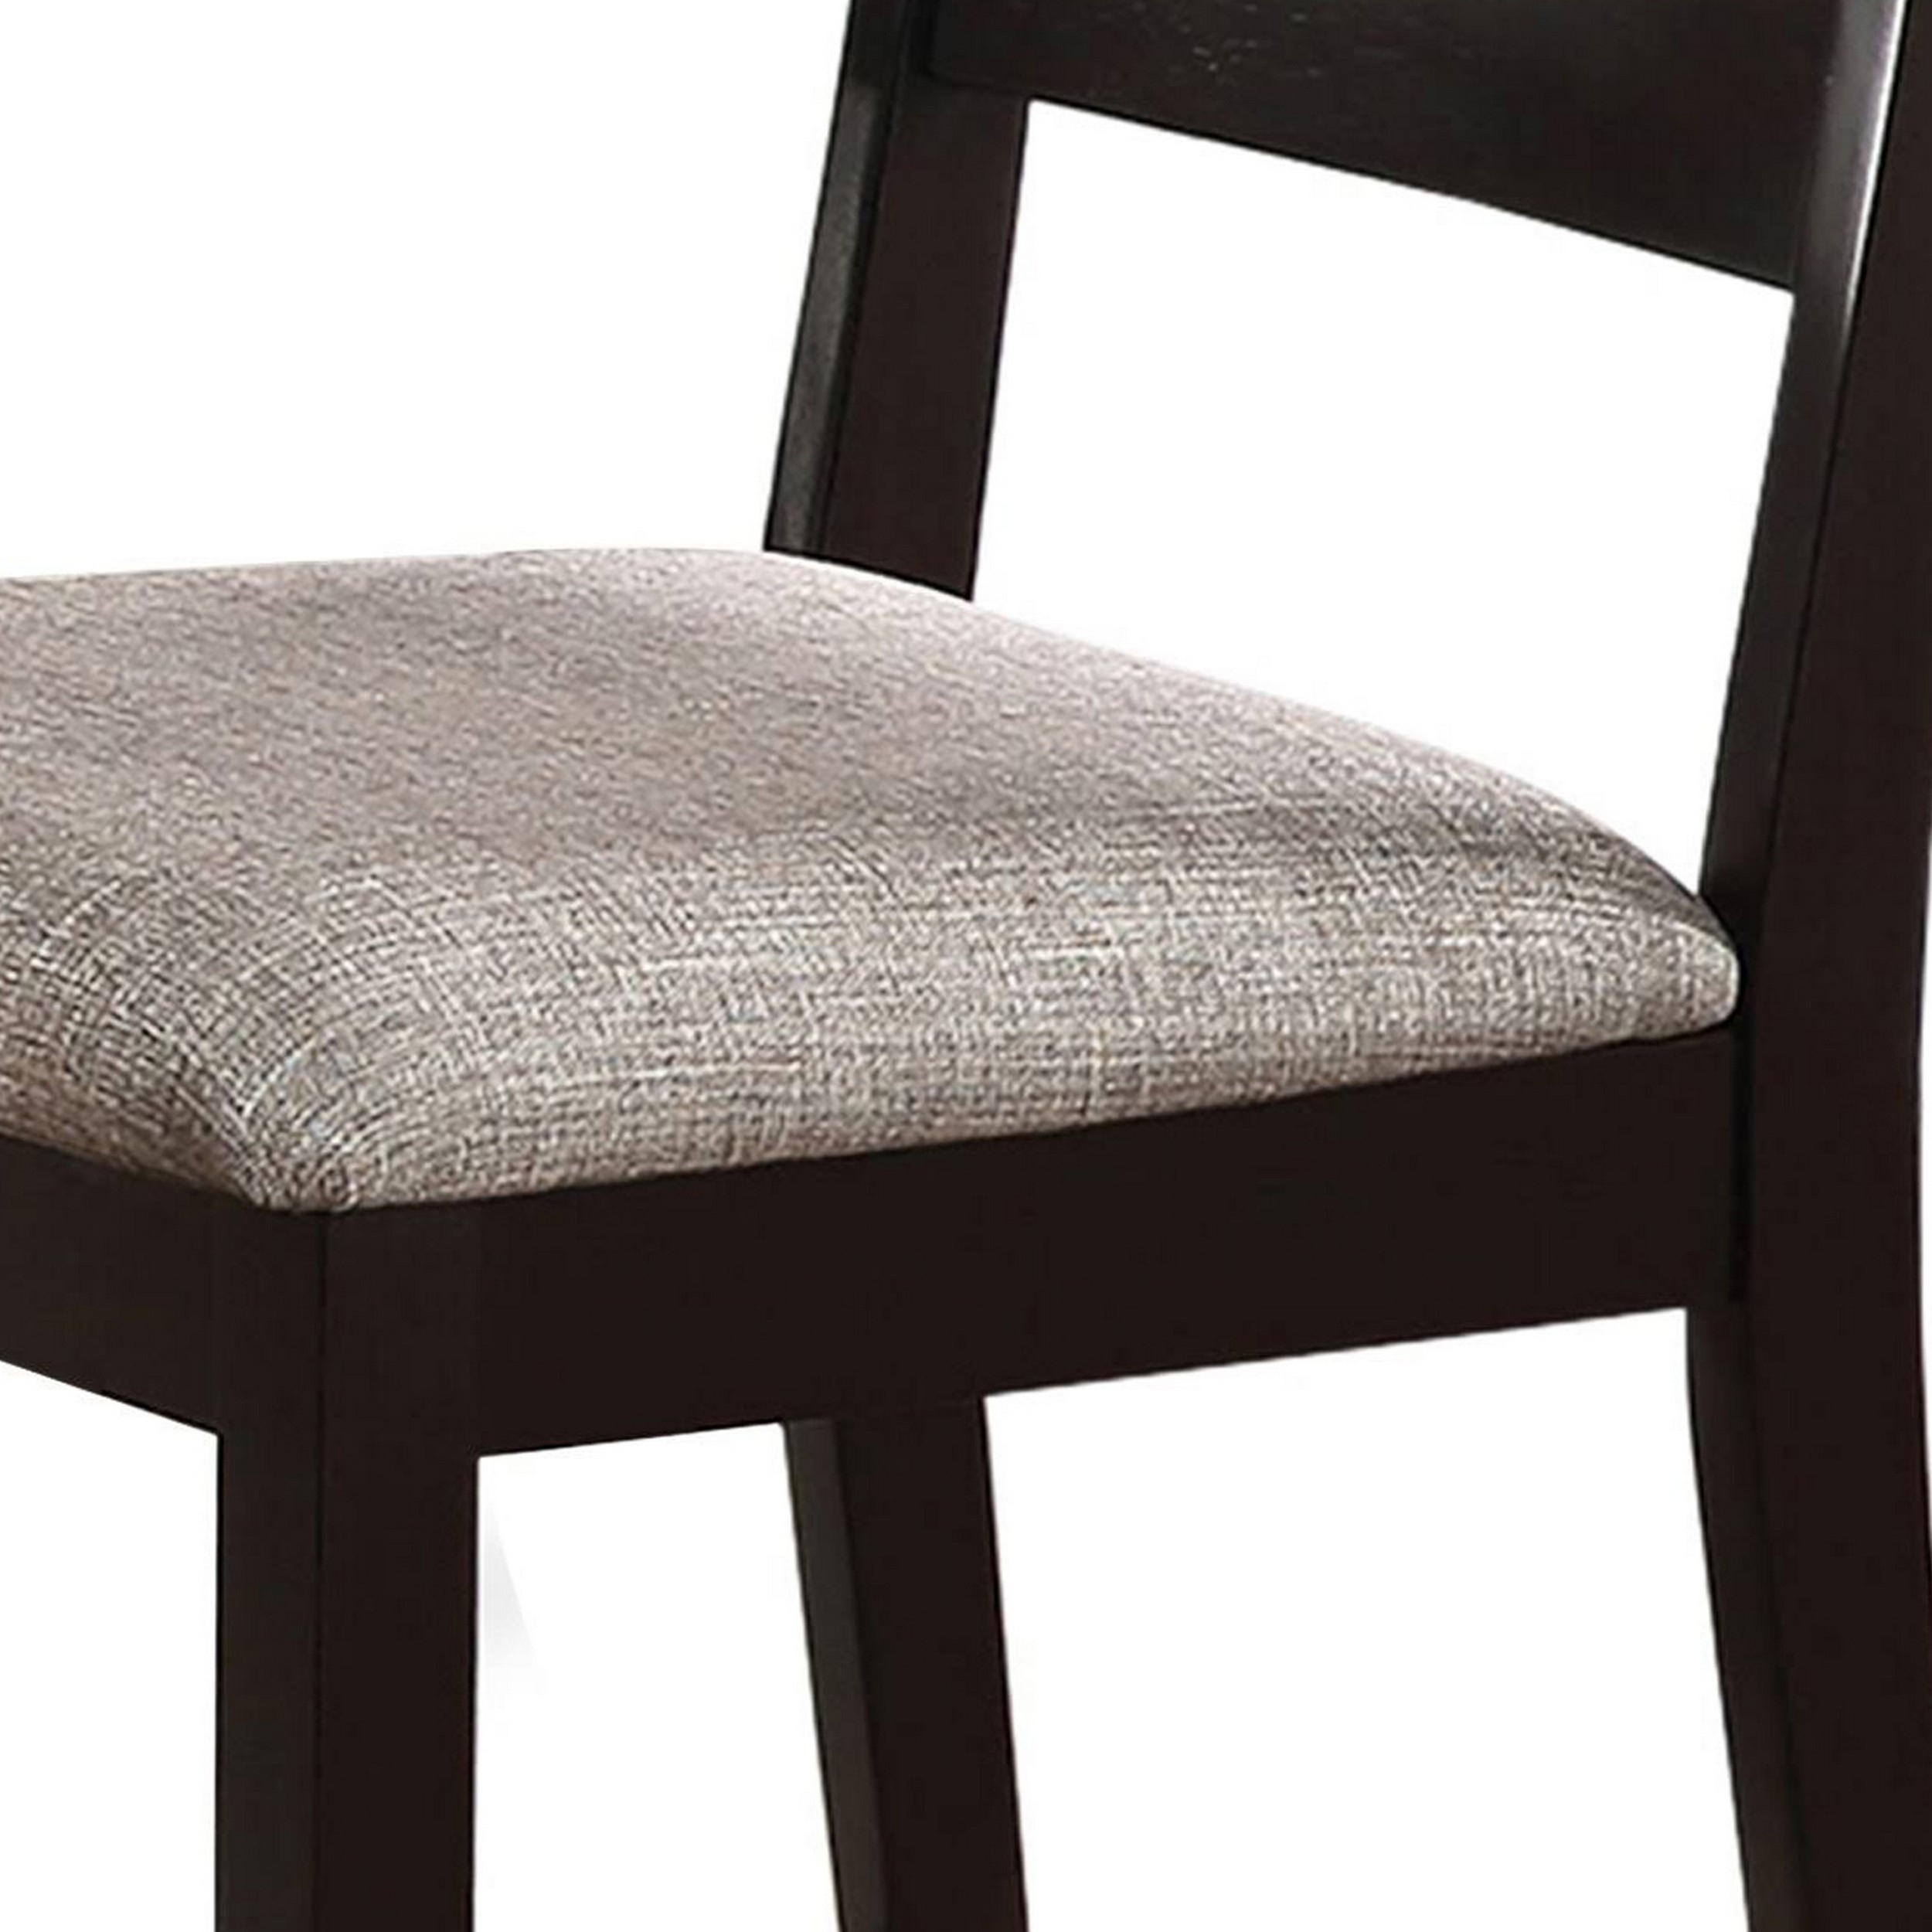 Reid 24 Inch Counter Height Chair, Set Of 2, Slatted, Espresso Brown, Gray- Saltoro Sherpi